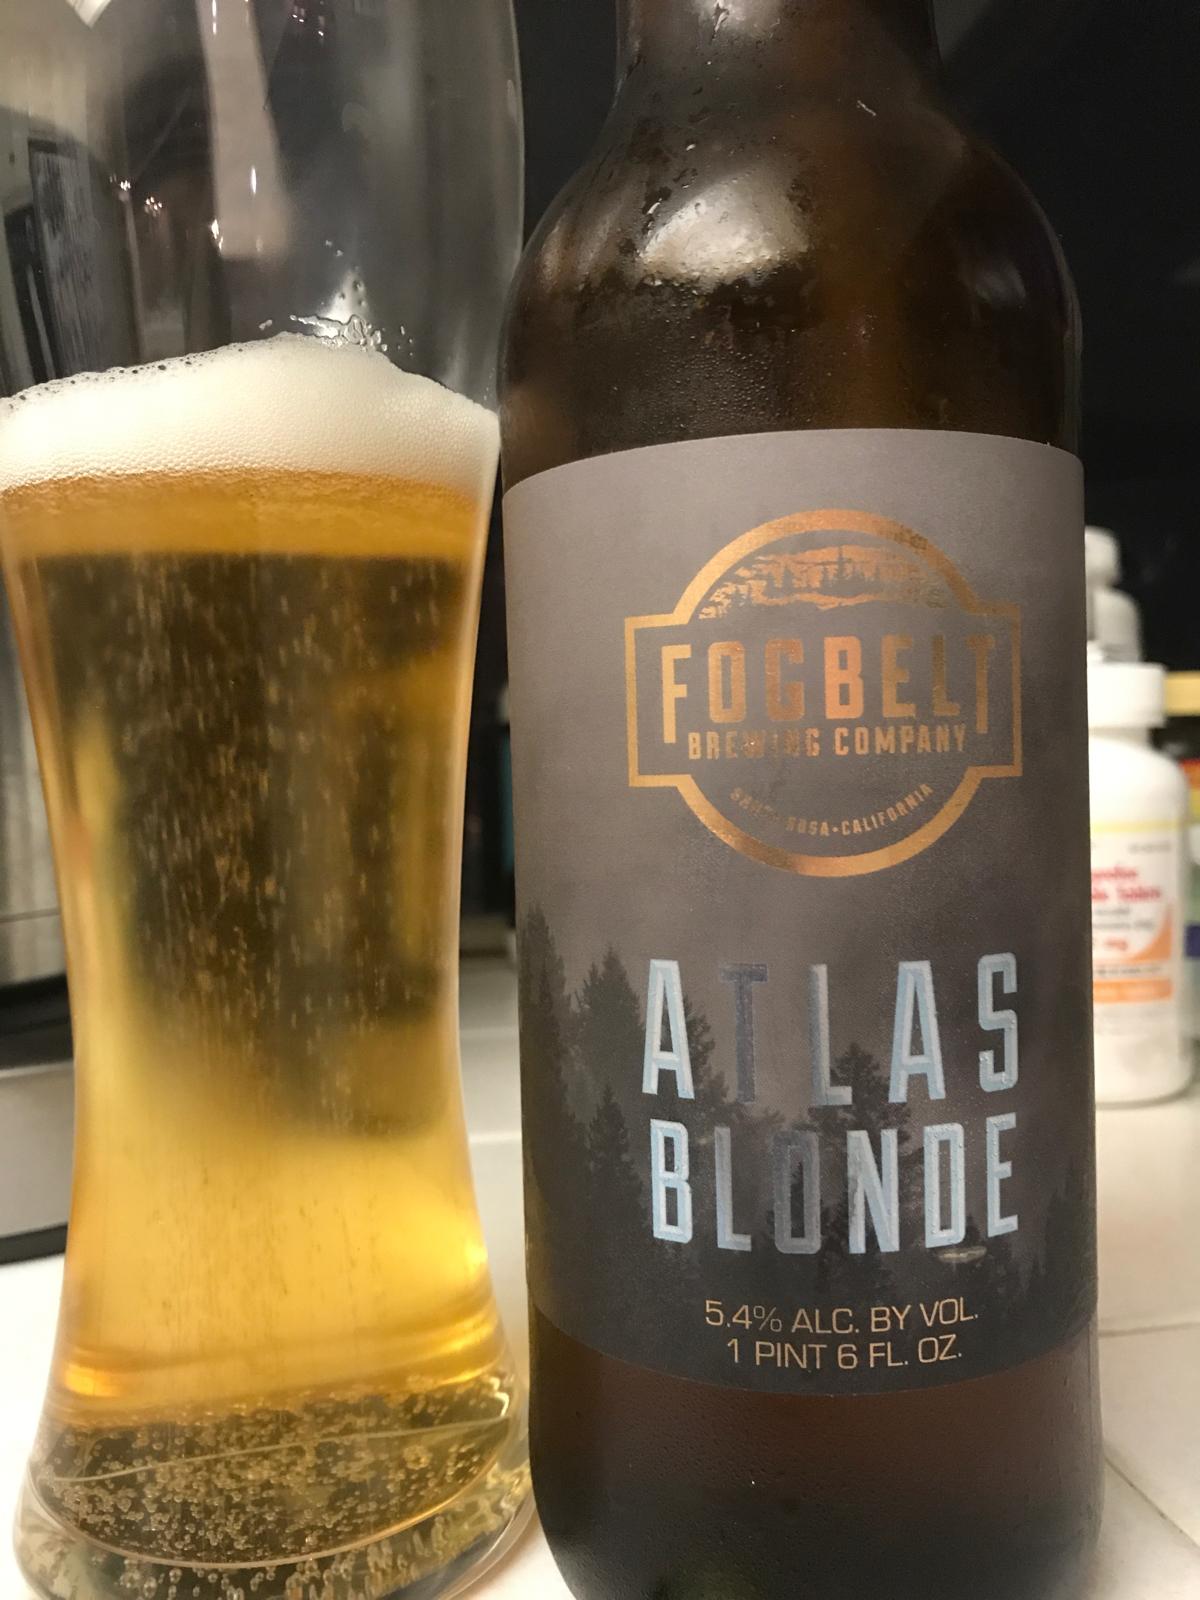 Atlas Blonde